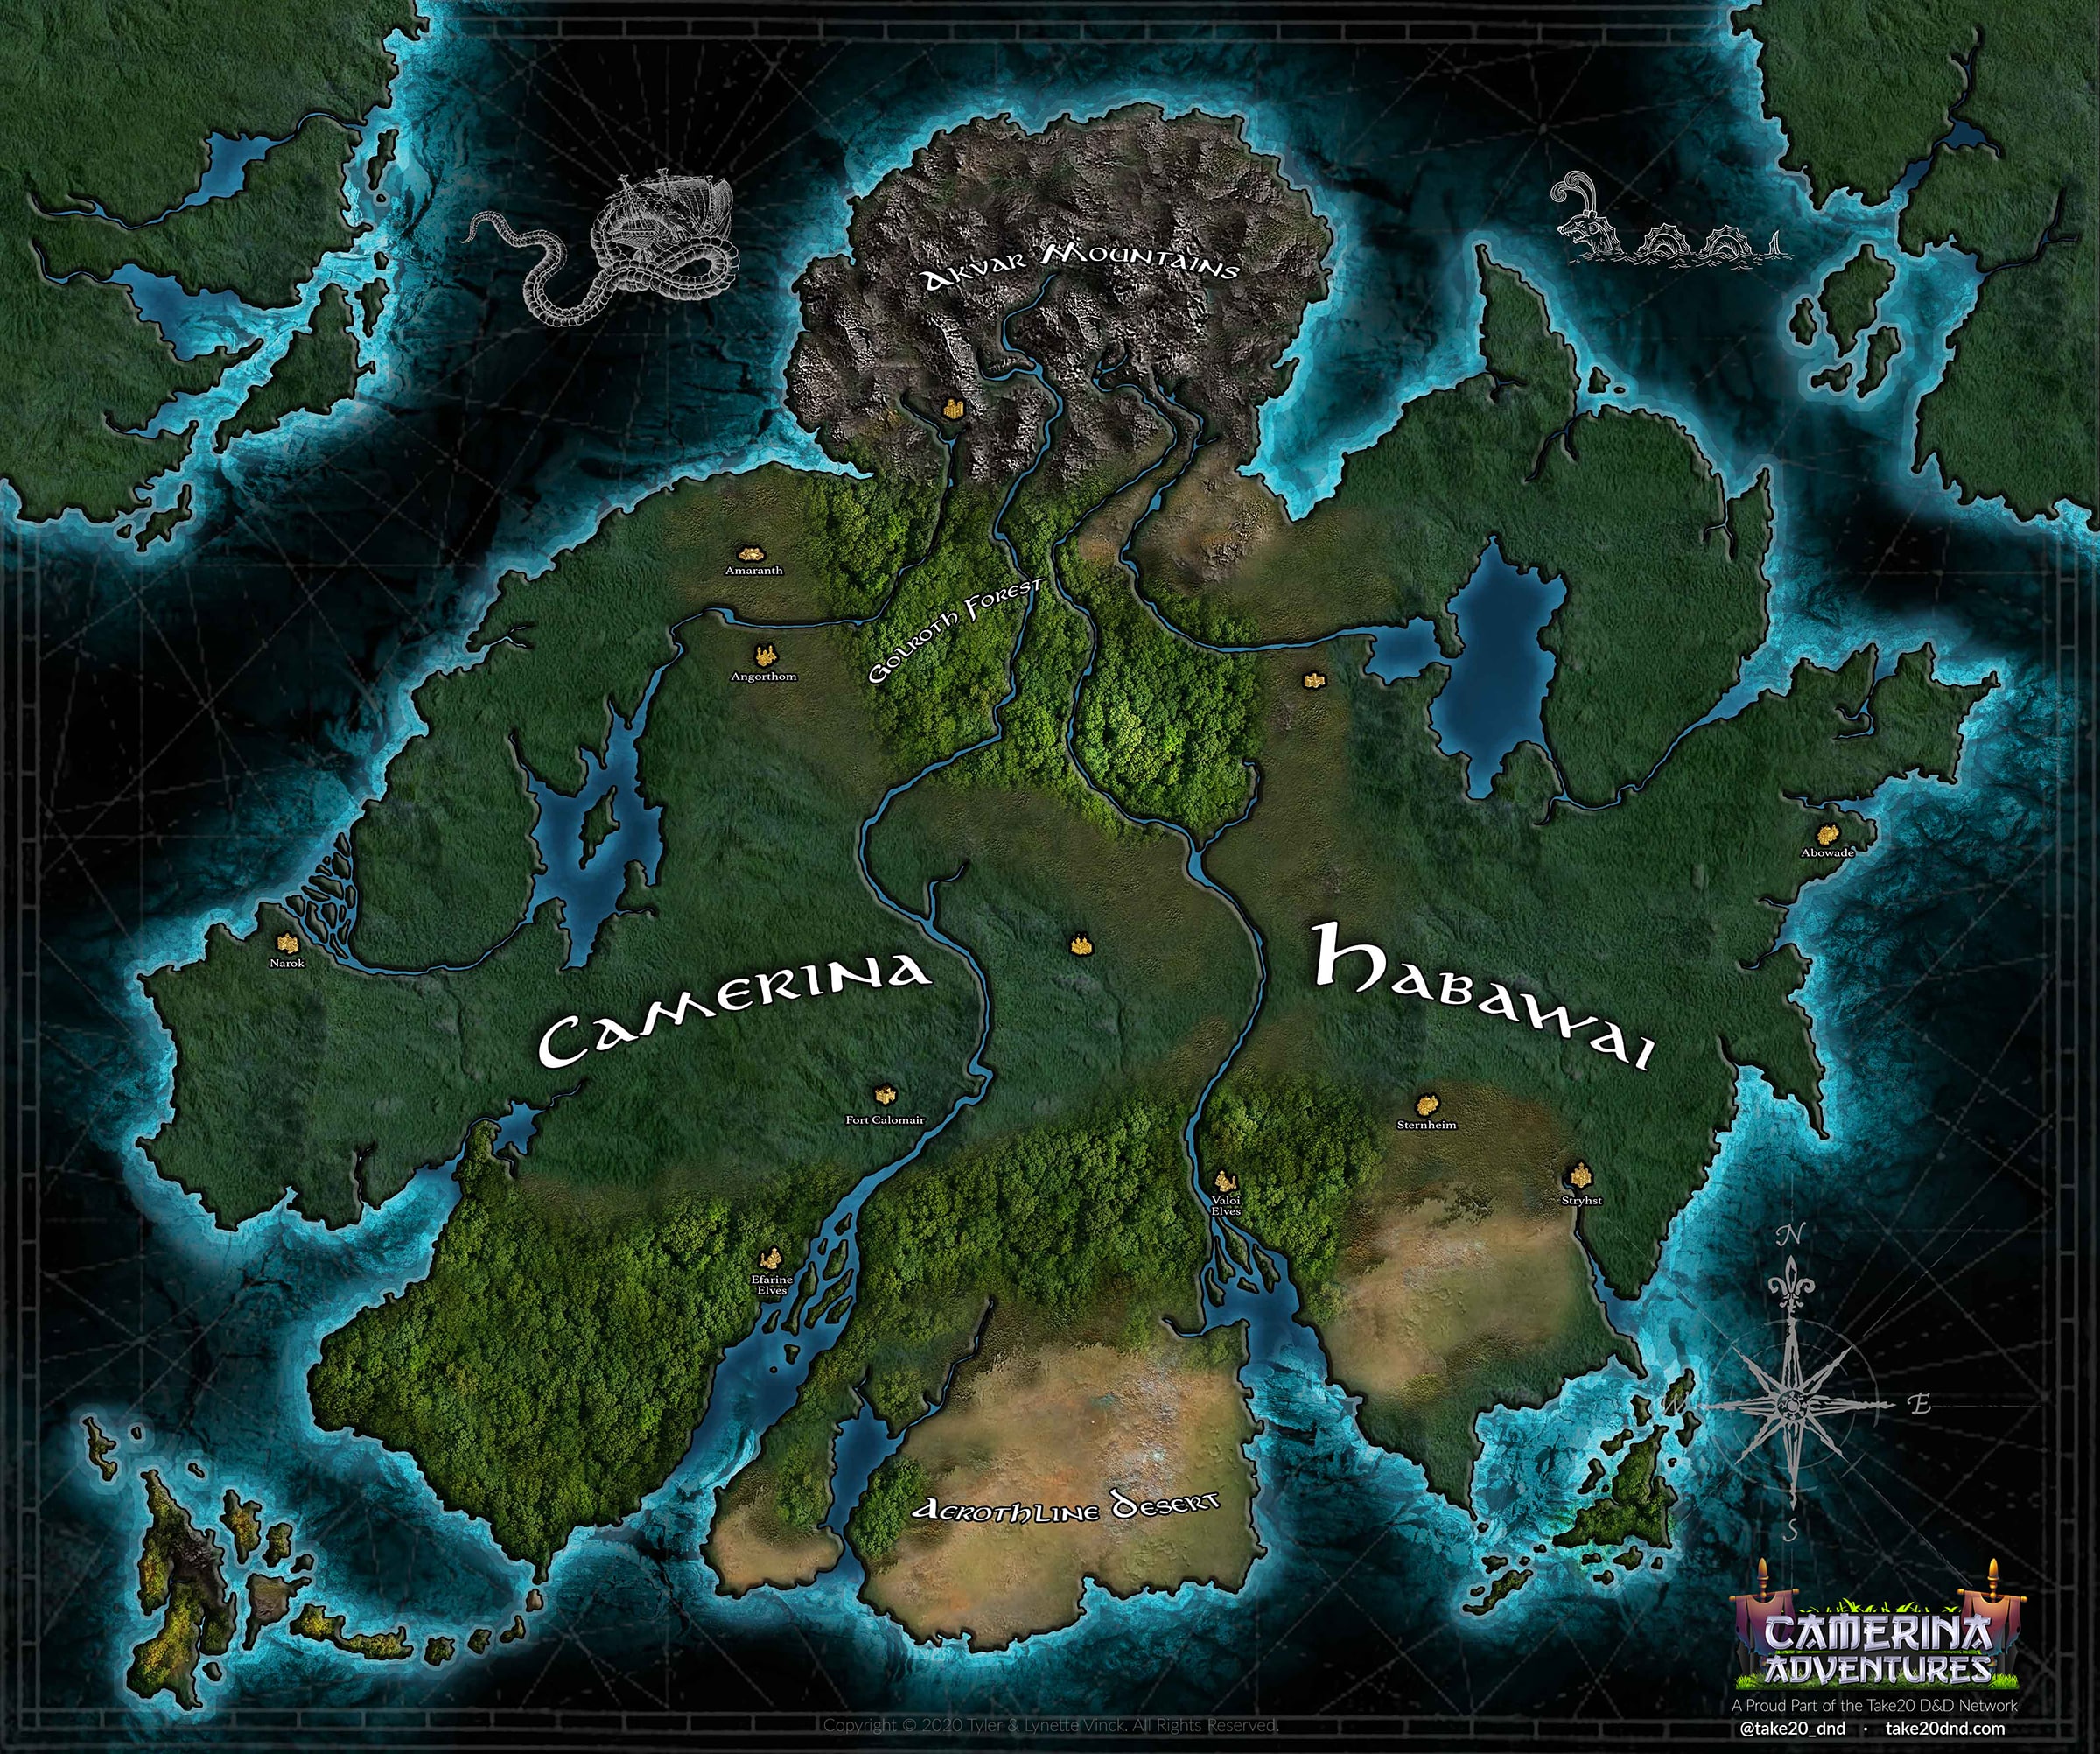 Camerina Adventures Map